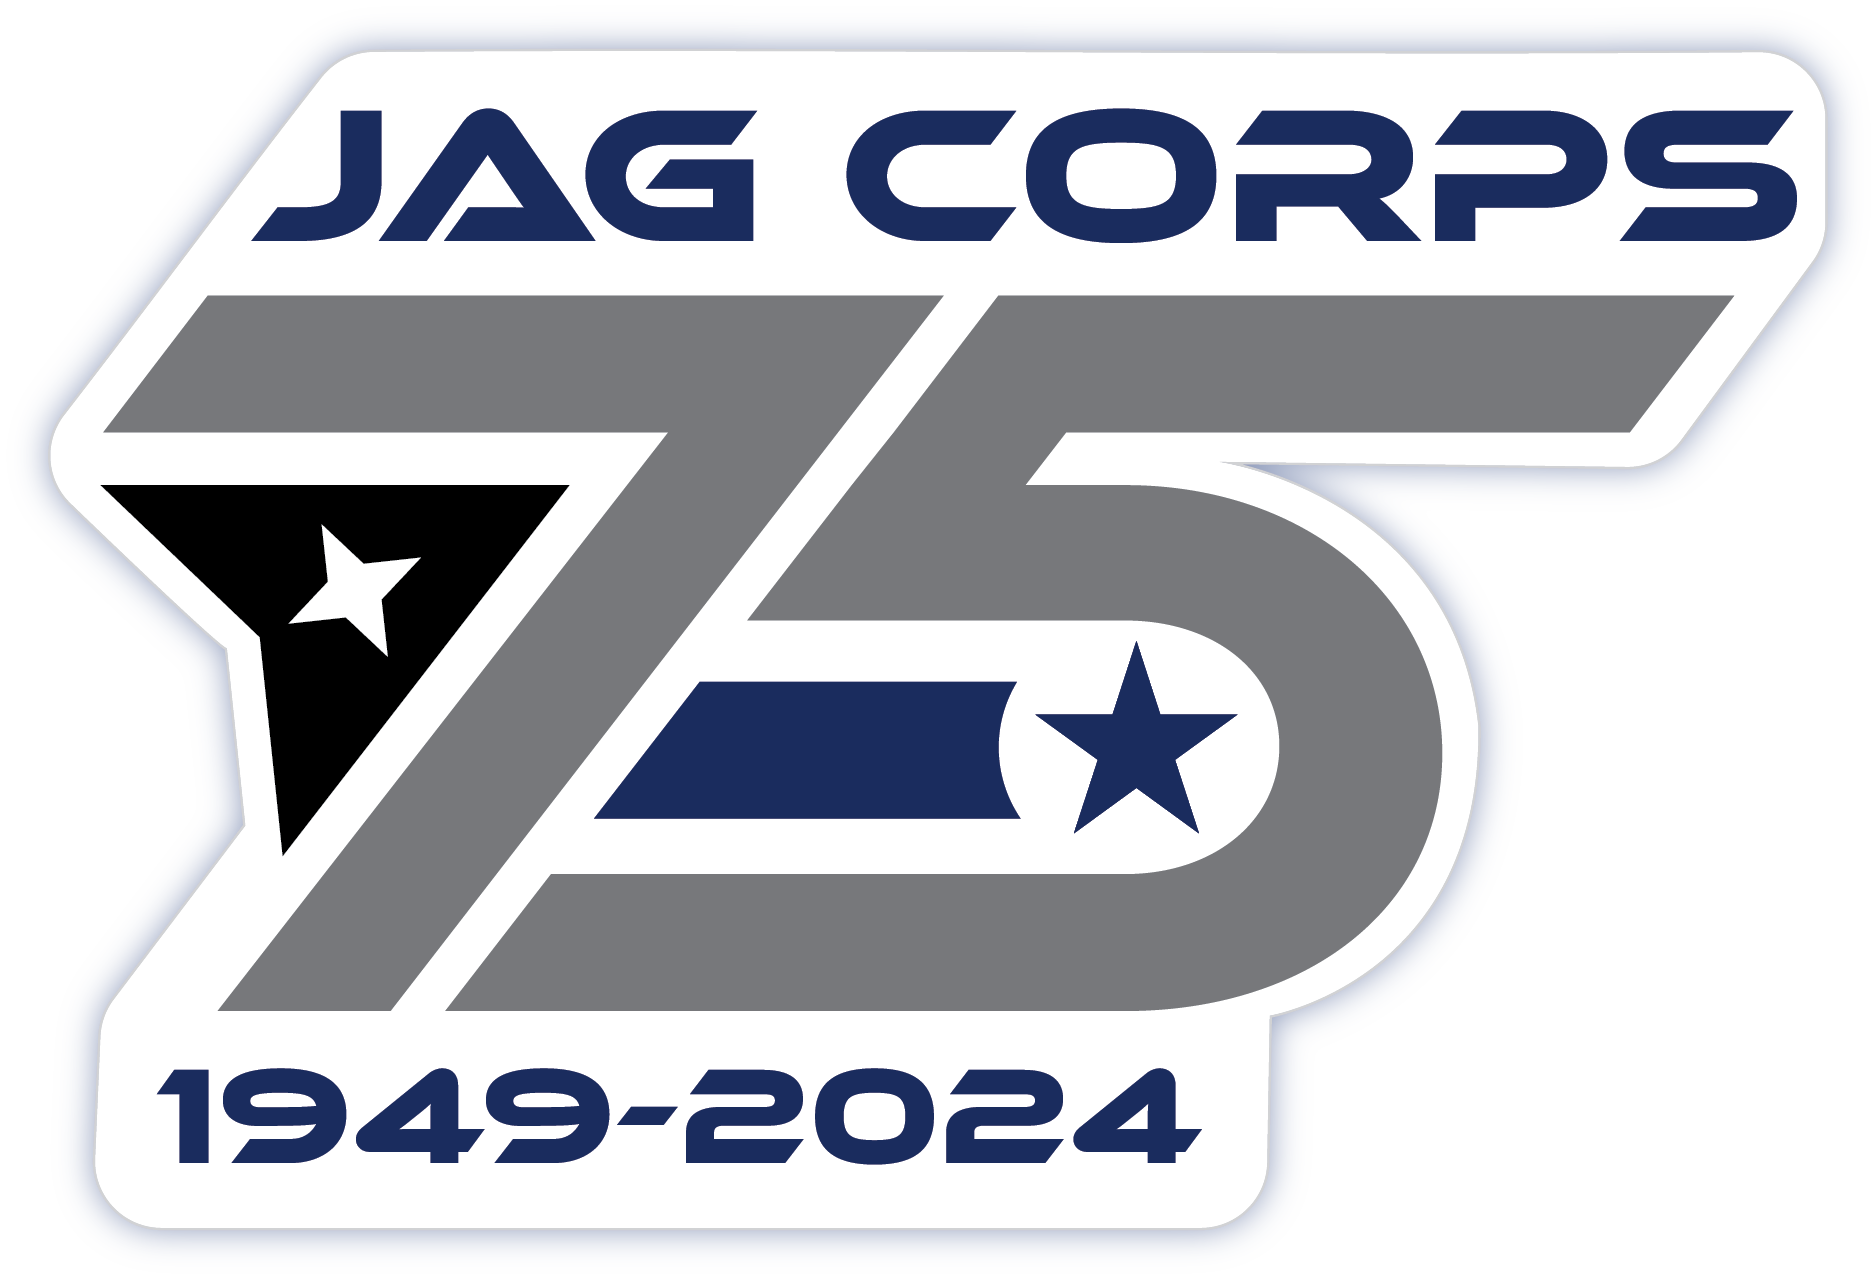 JAG Corps' 75th Anniversary Logo